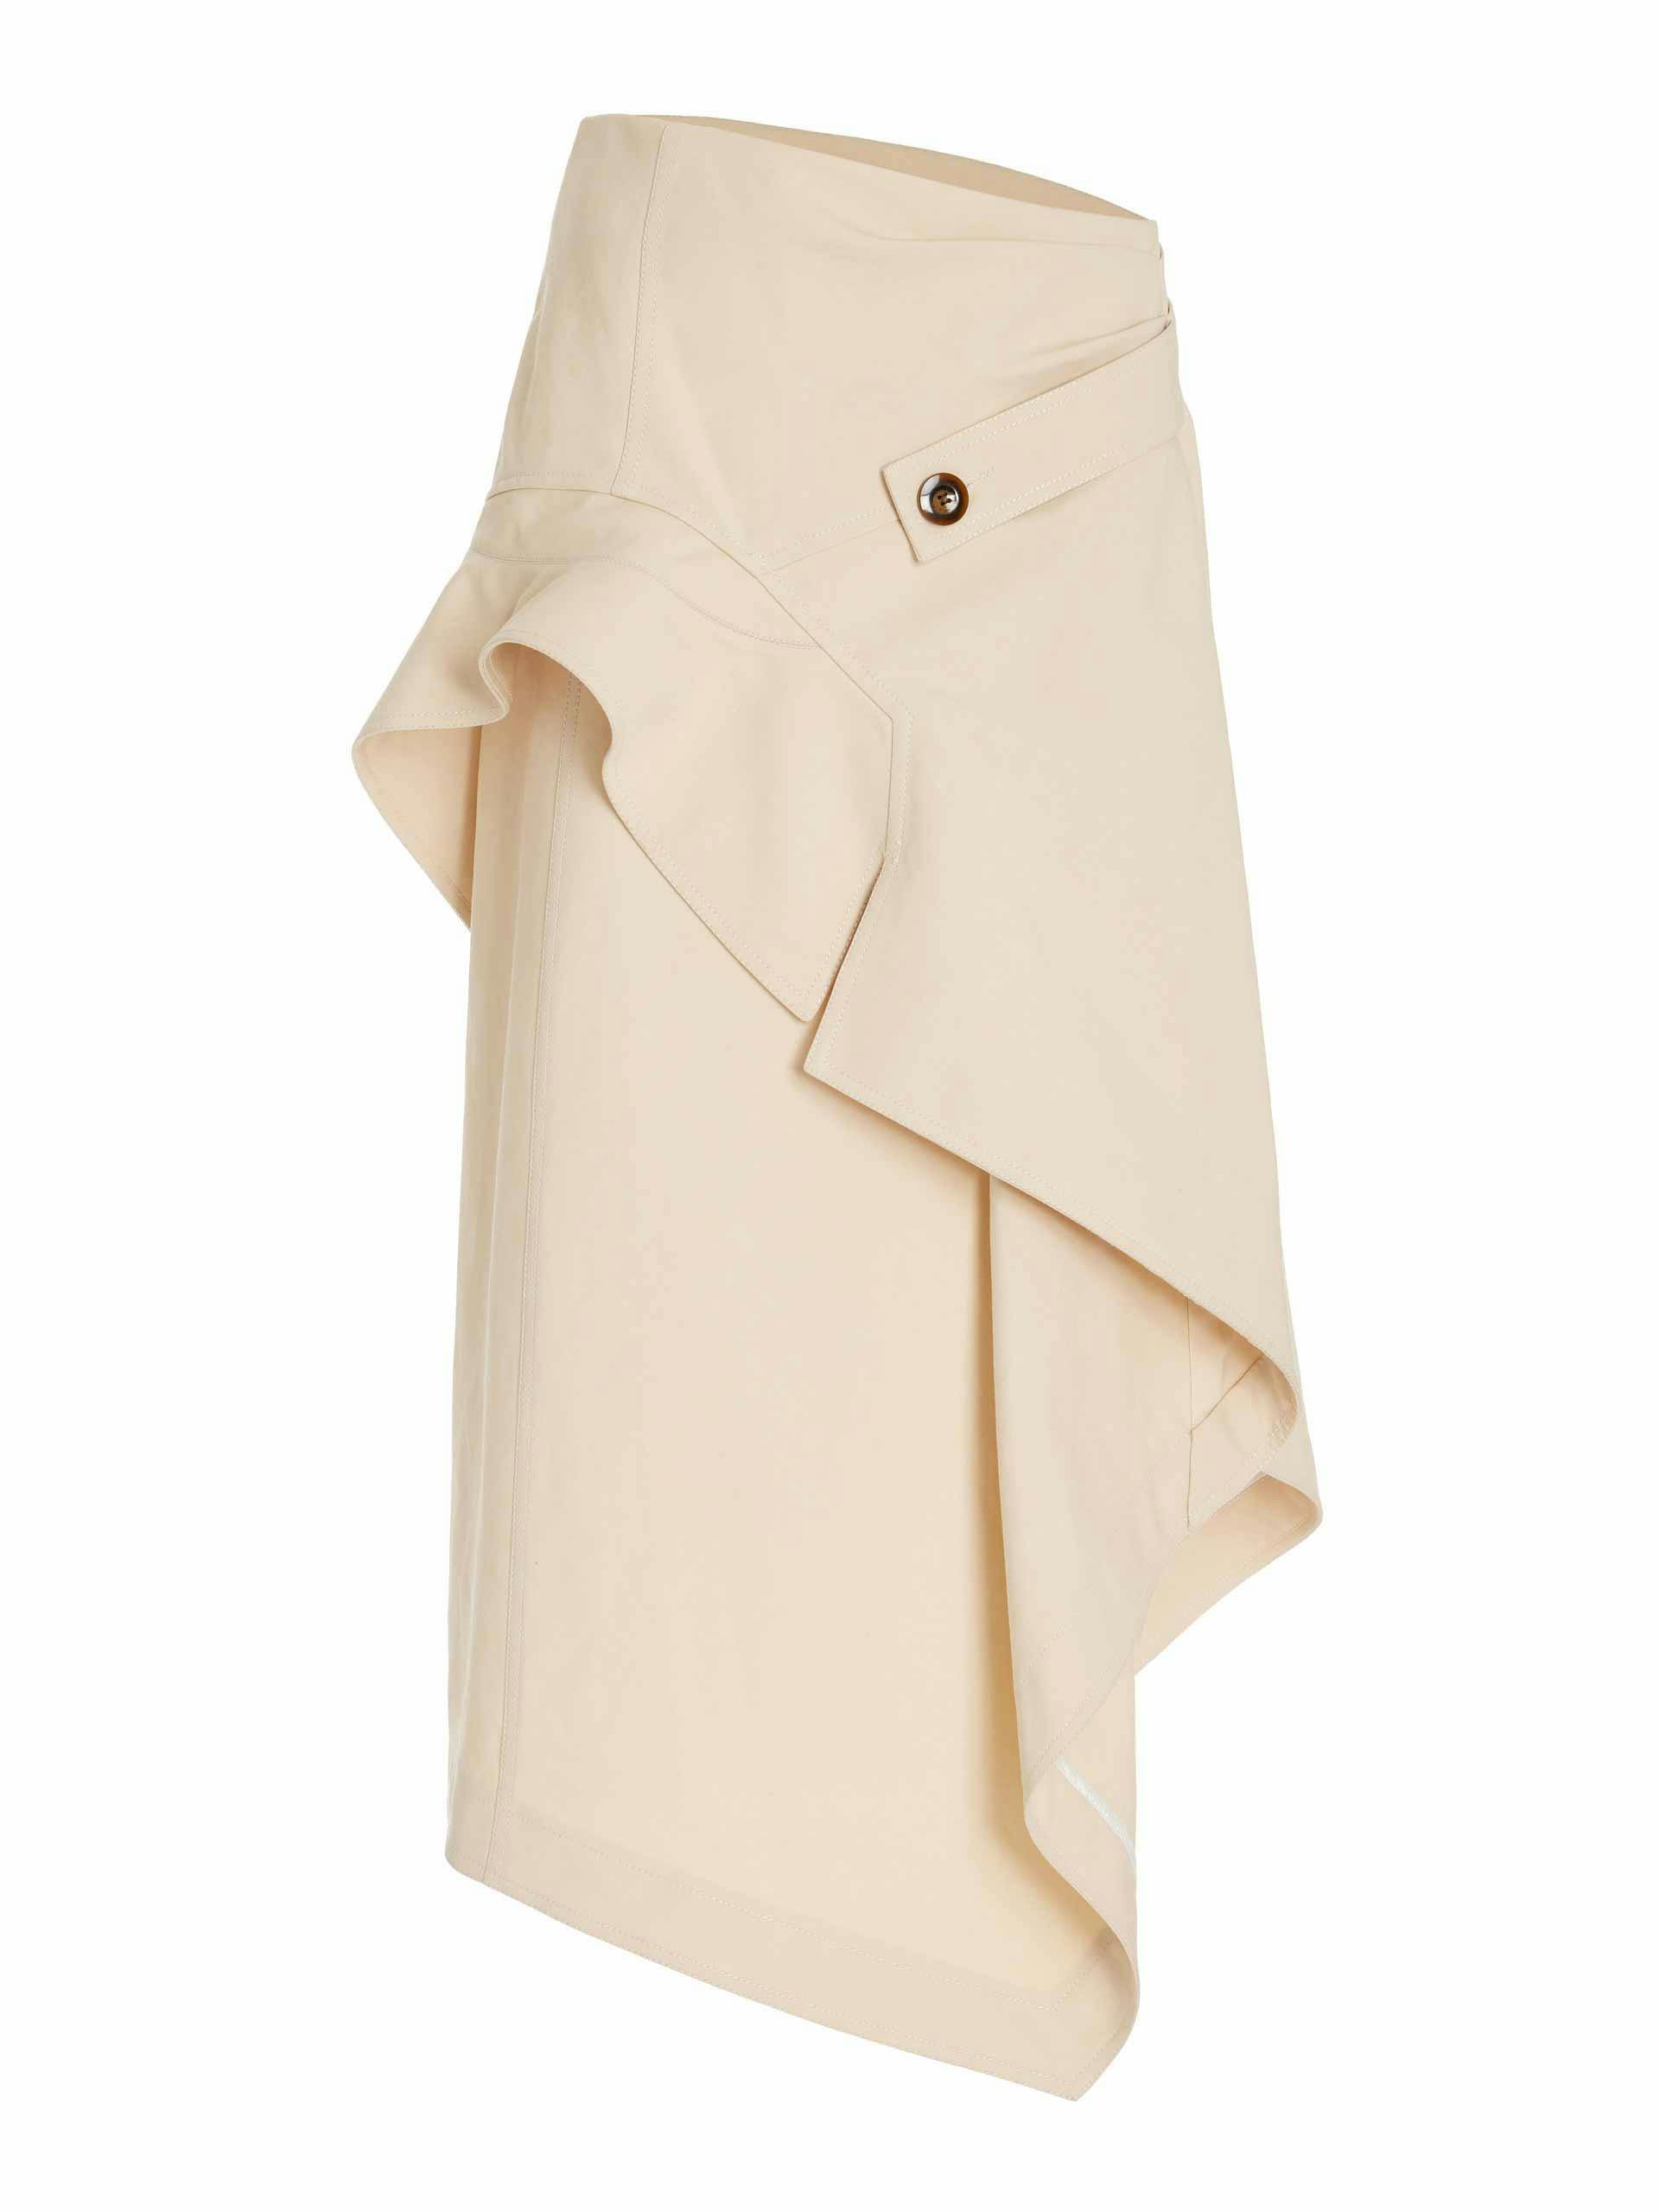 Draped cotton skirt